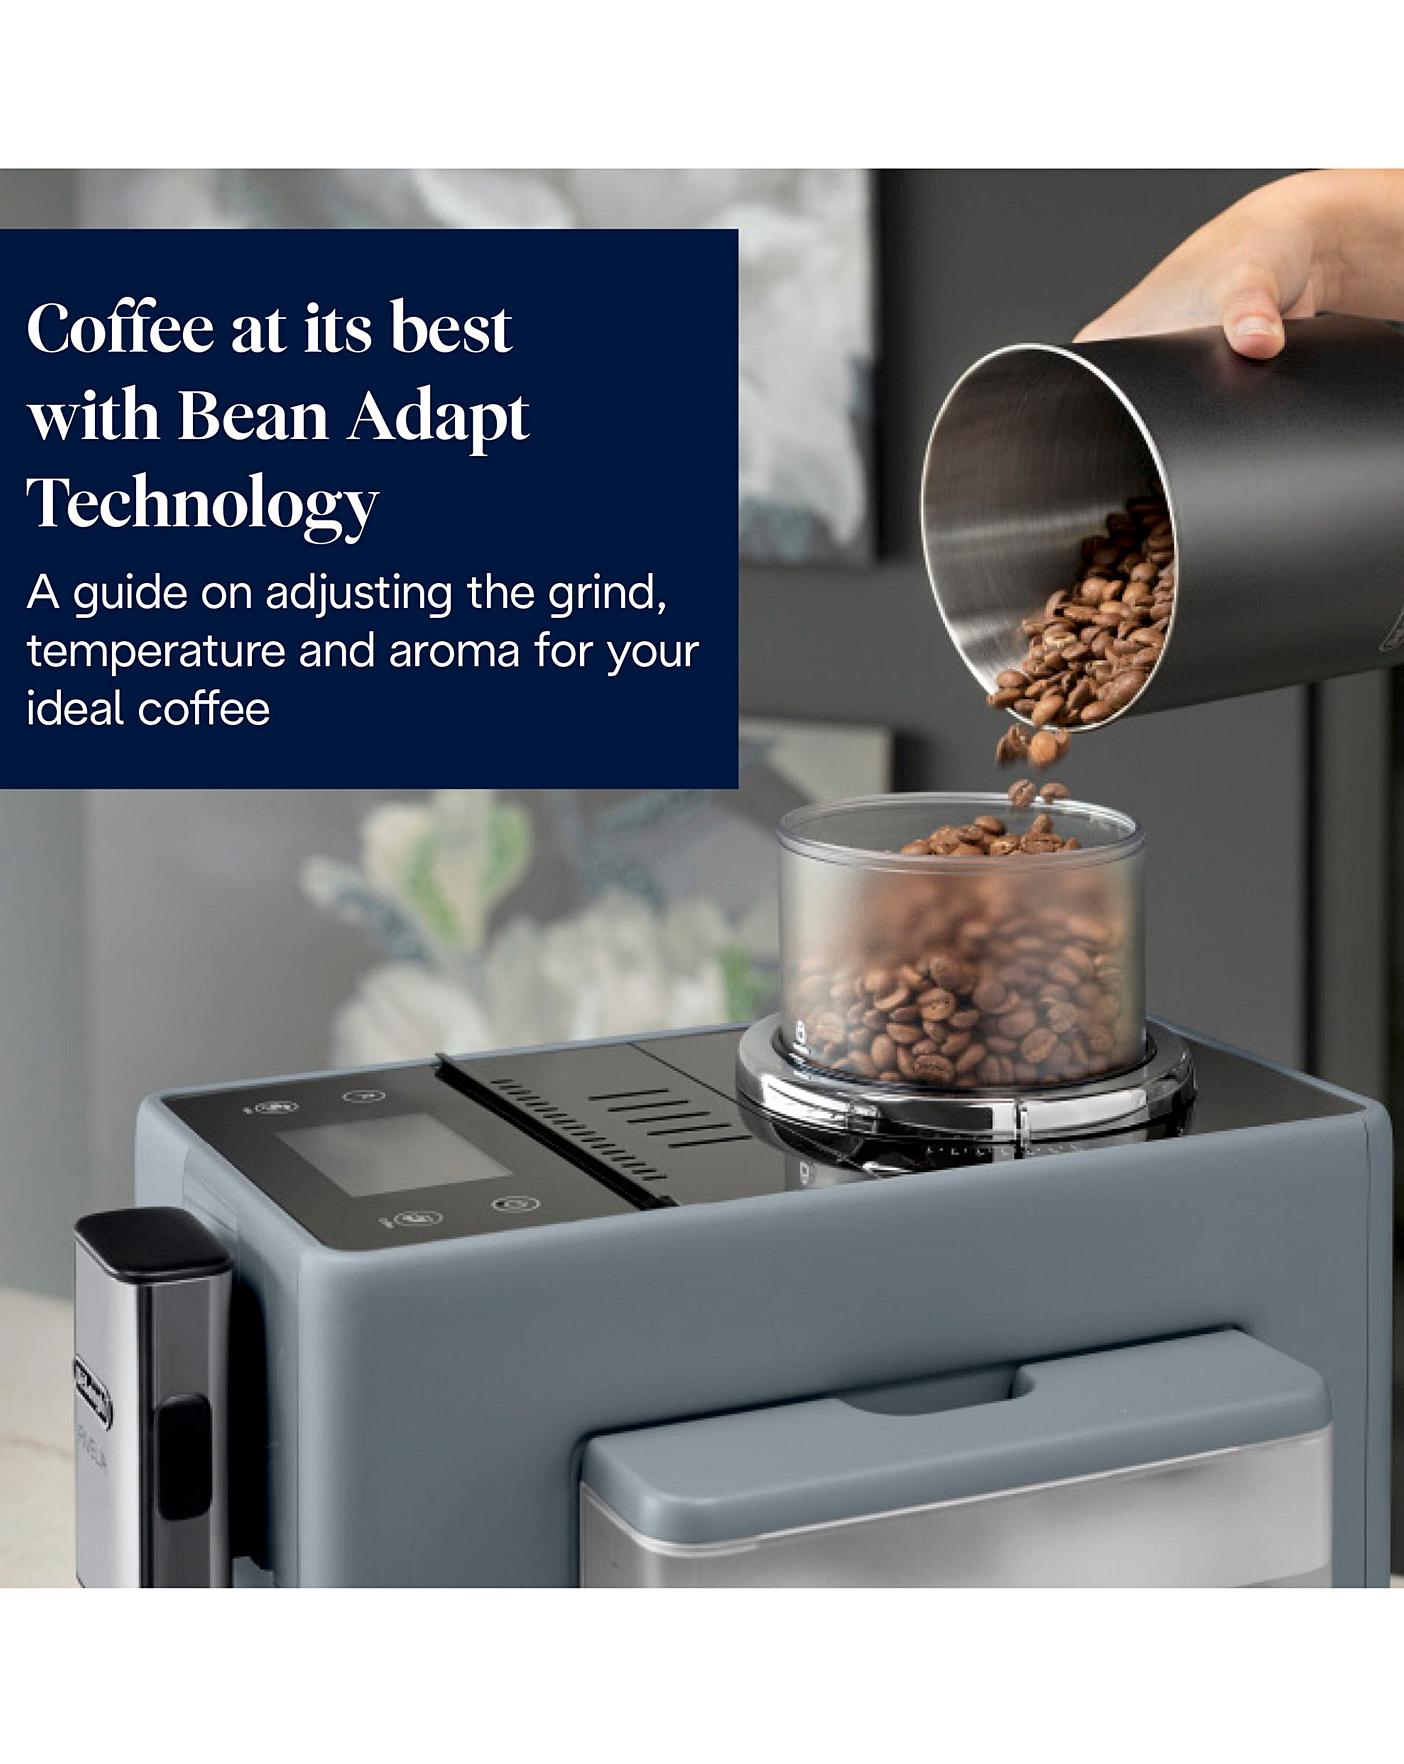 De'Longhi Rivelia Automatic Compact Bean to Cup Coffee Machine, Grey Blue